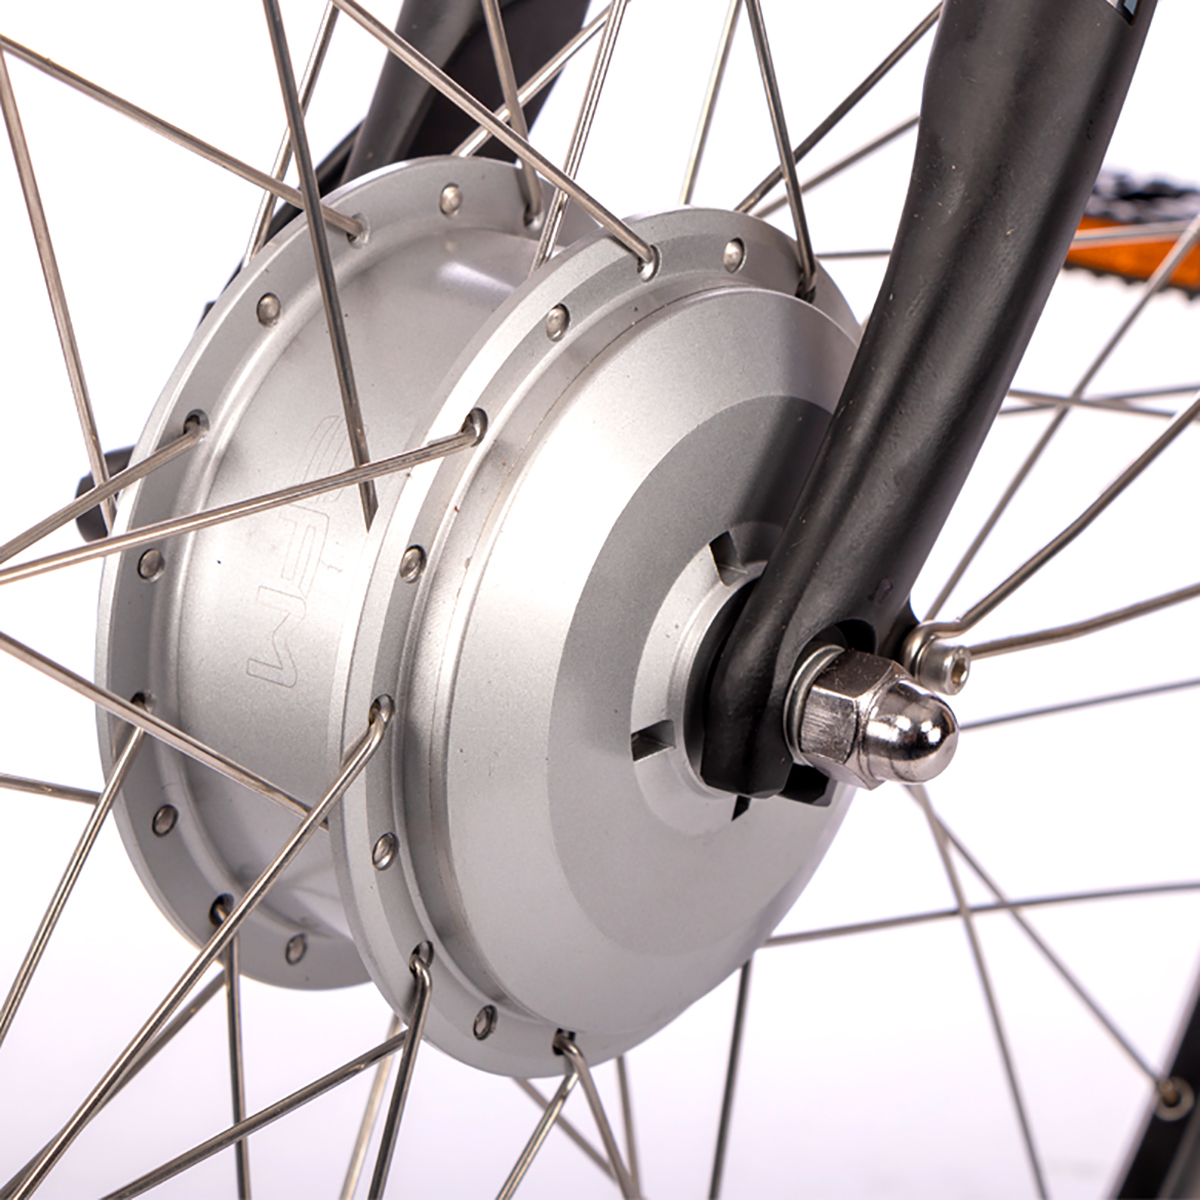 375 Plus Damen-Rad, Citybike Wh, Rot) Zoll, Advanced Rahmenhöhe: 45 SAXONETTE (Laufradgröße: 28 cm,